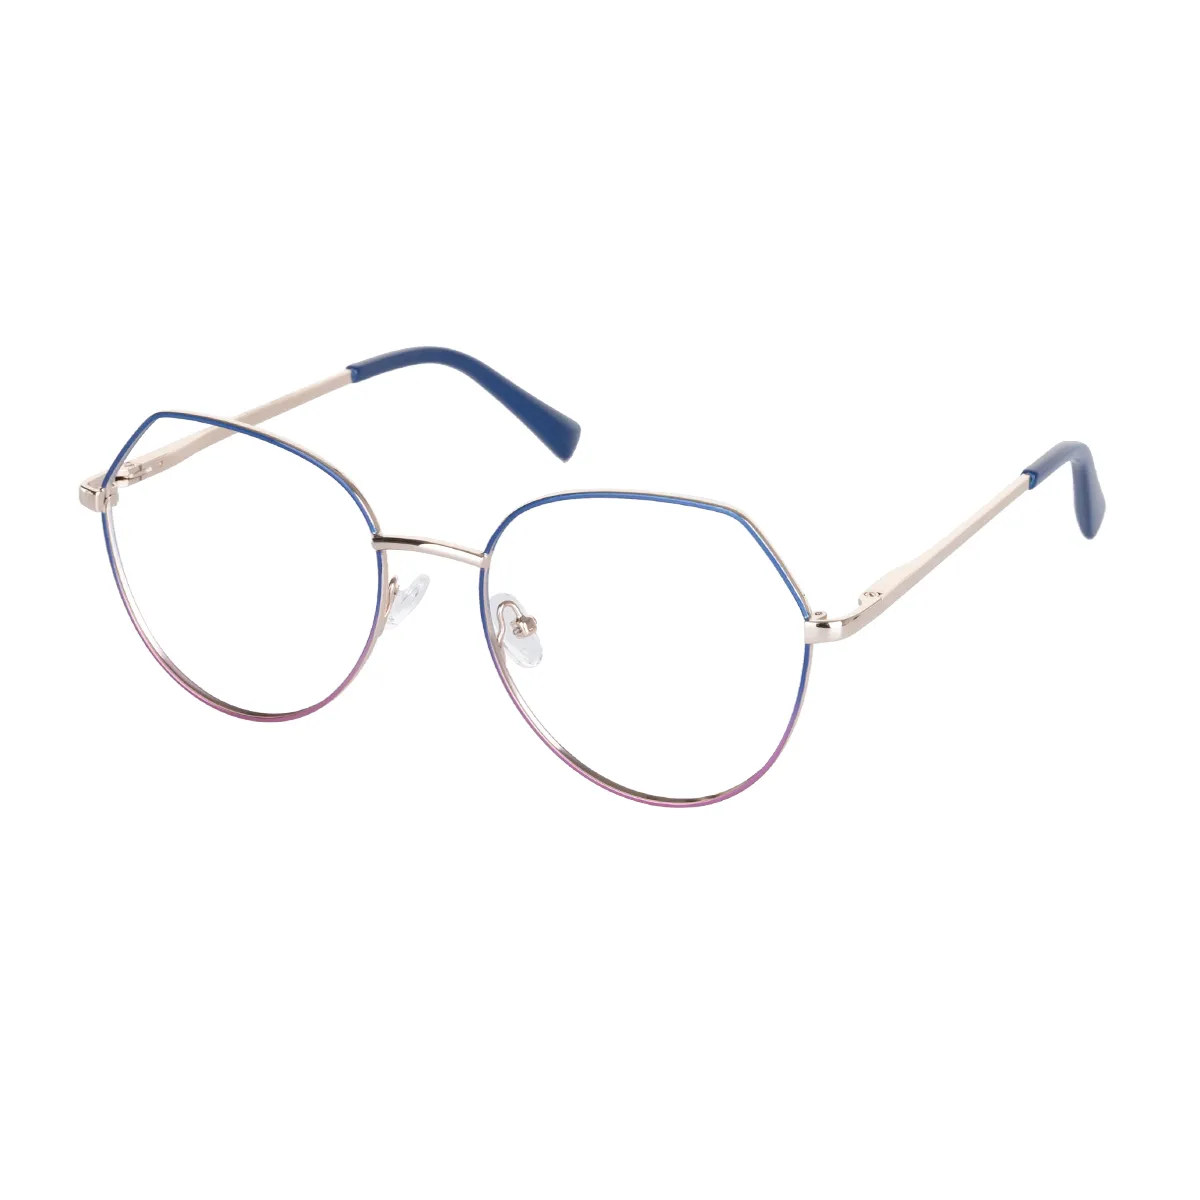 Elsa - Geometric Blue/Pink Glasses for Women - EFE